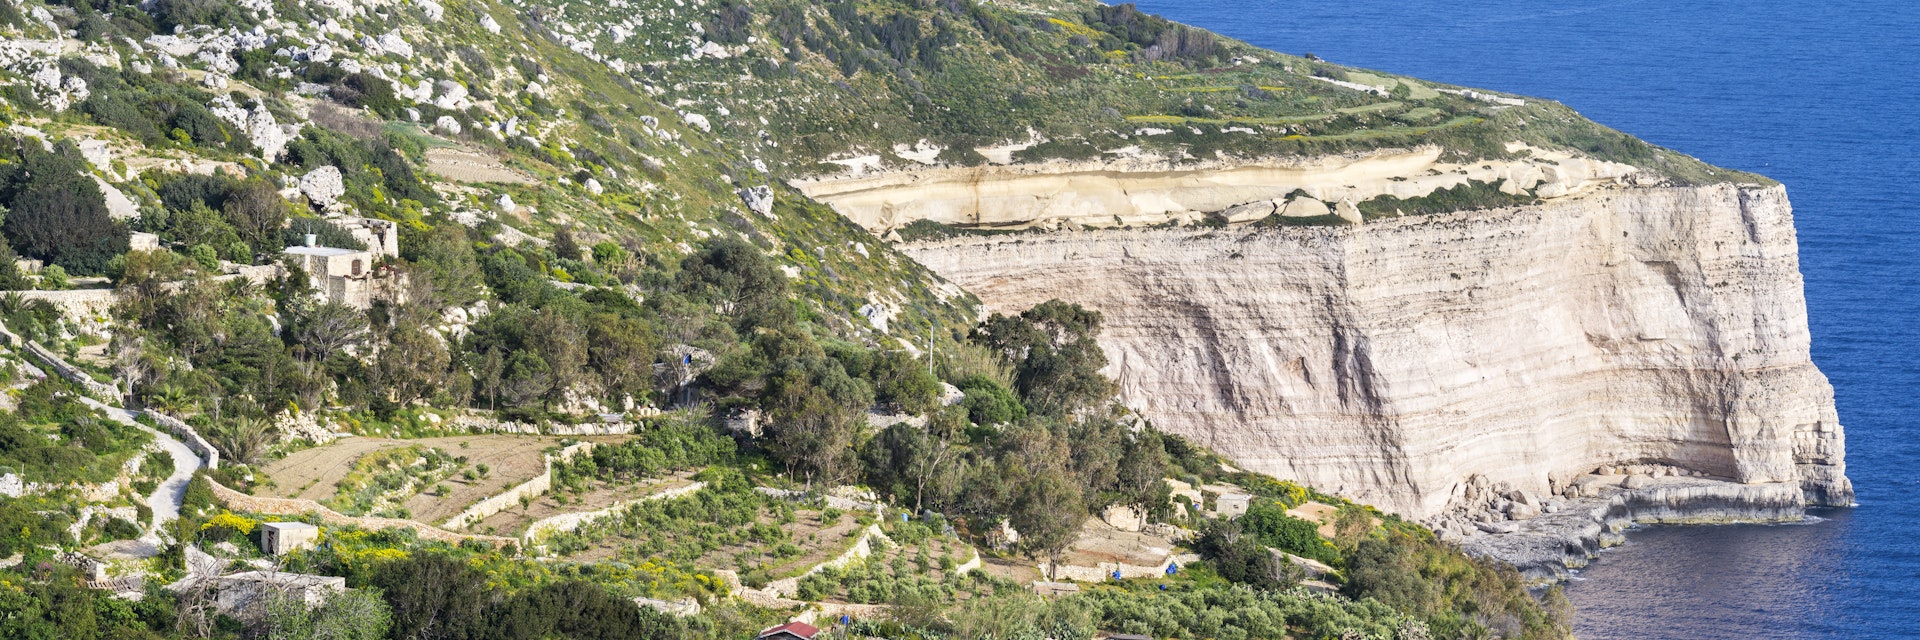 View of Dingli Cliffs, Malta